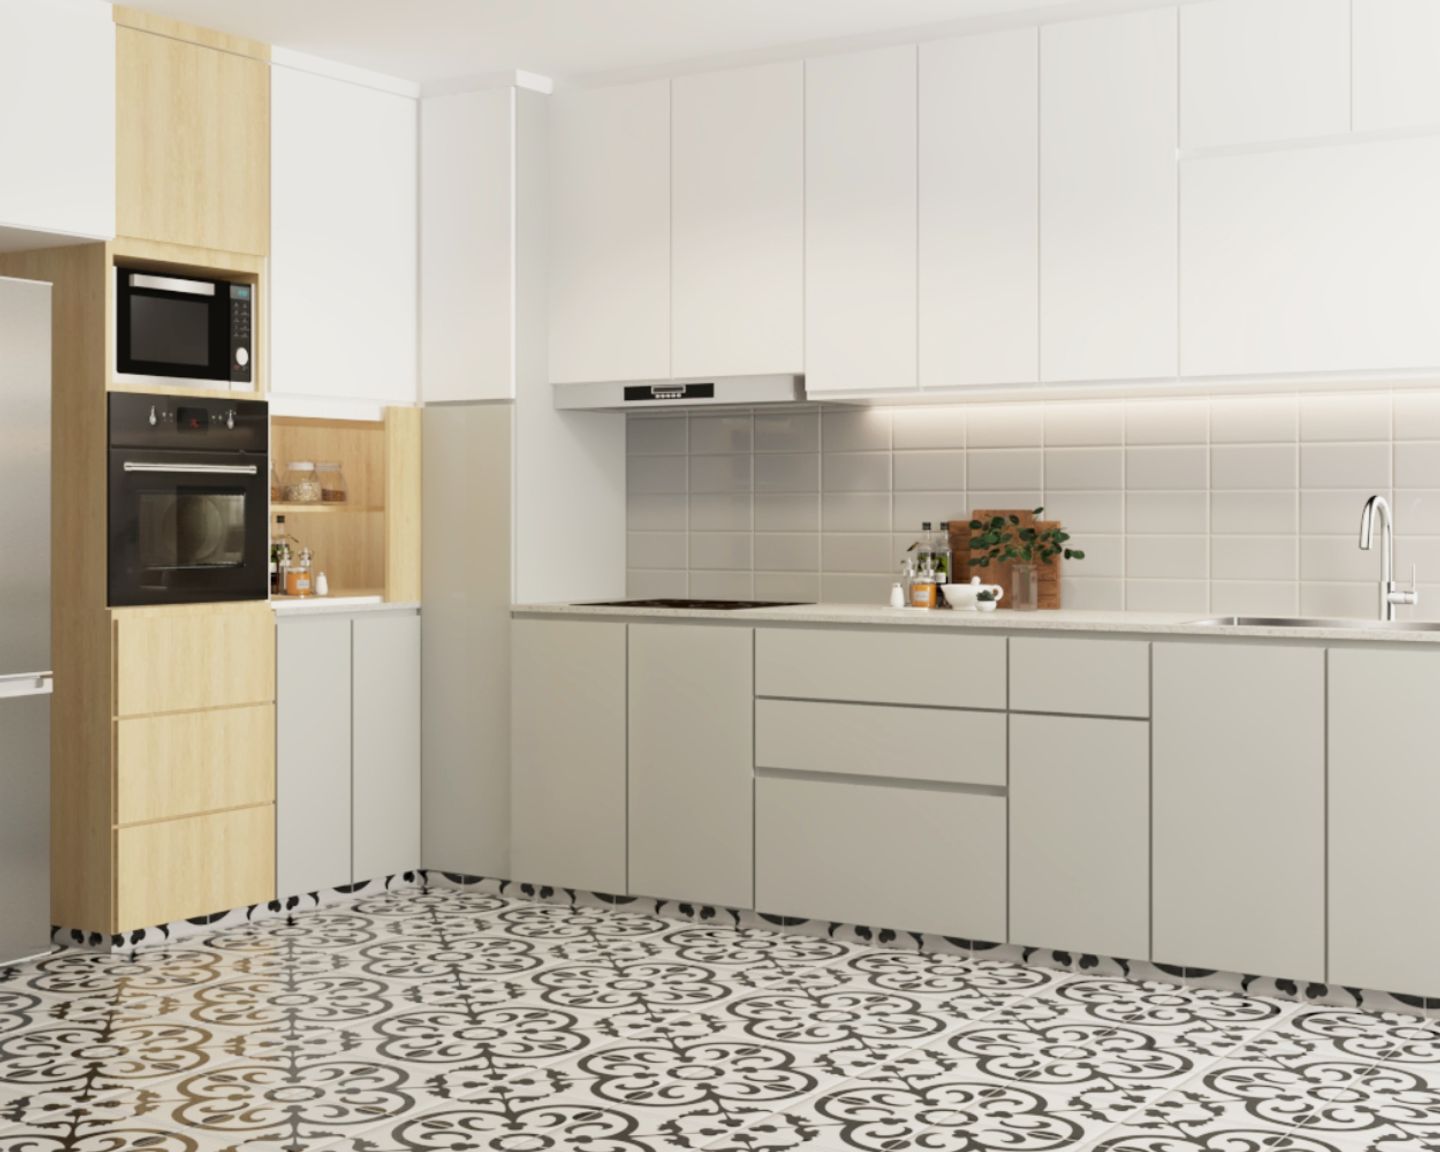 Black And White Patterned Flooring Design For Kitchens - Livspace